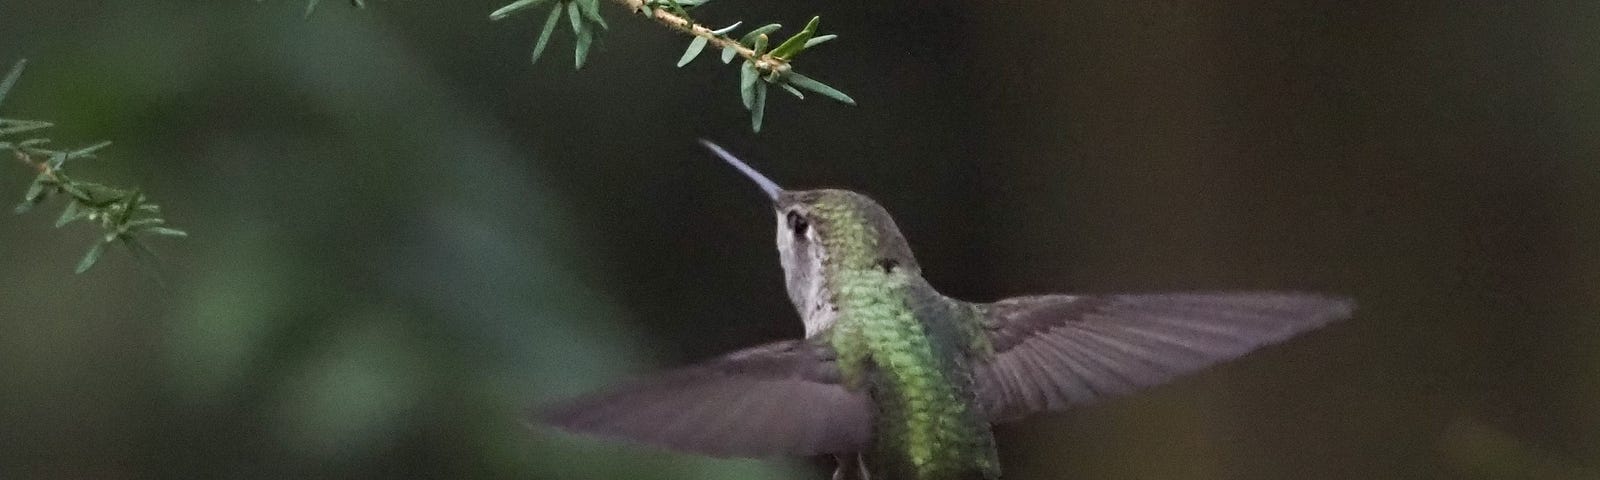 A humming bird, feeding.